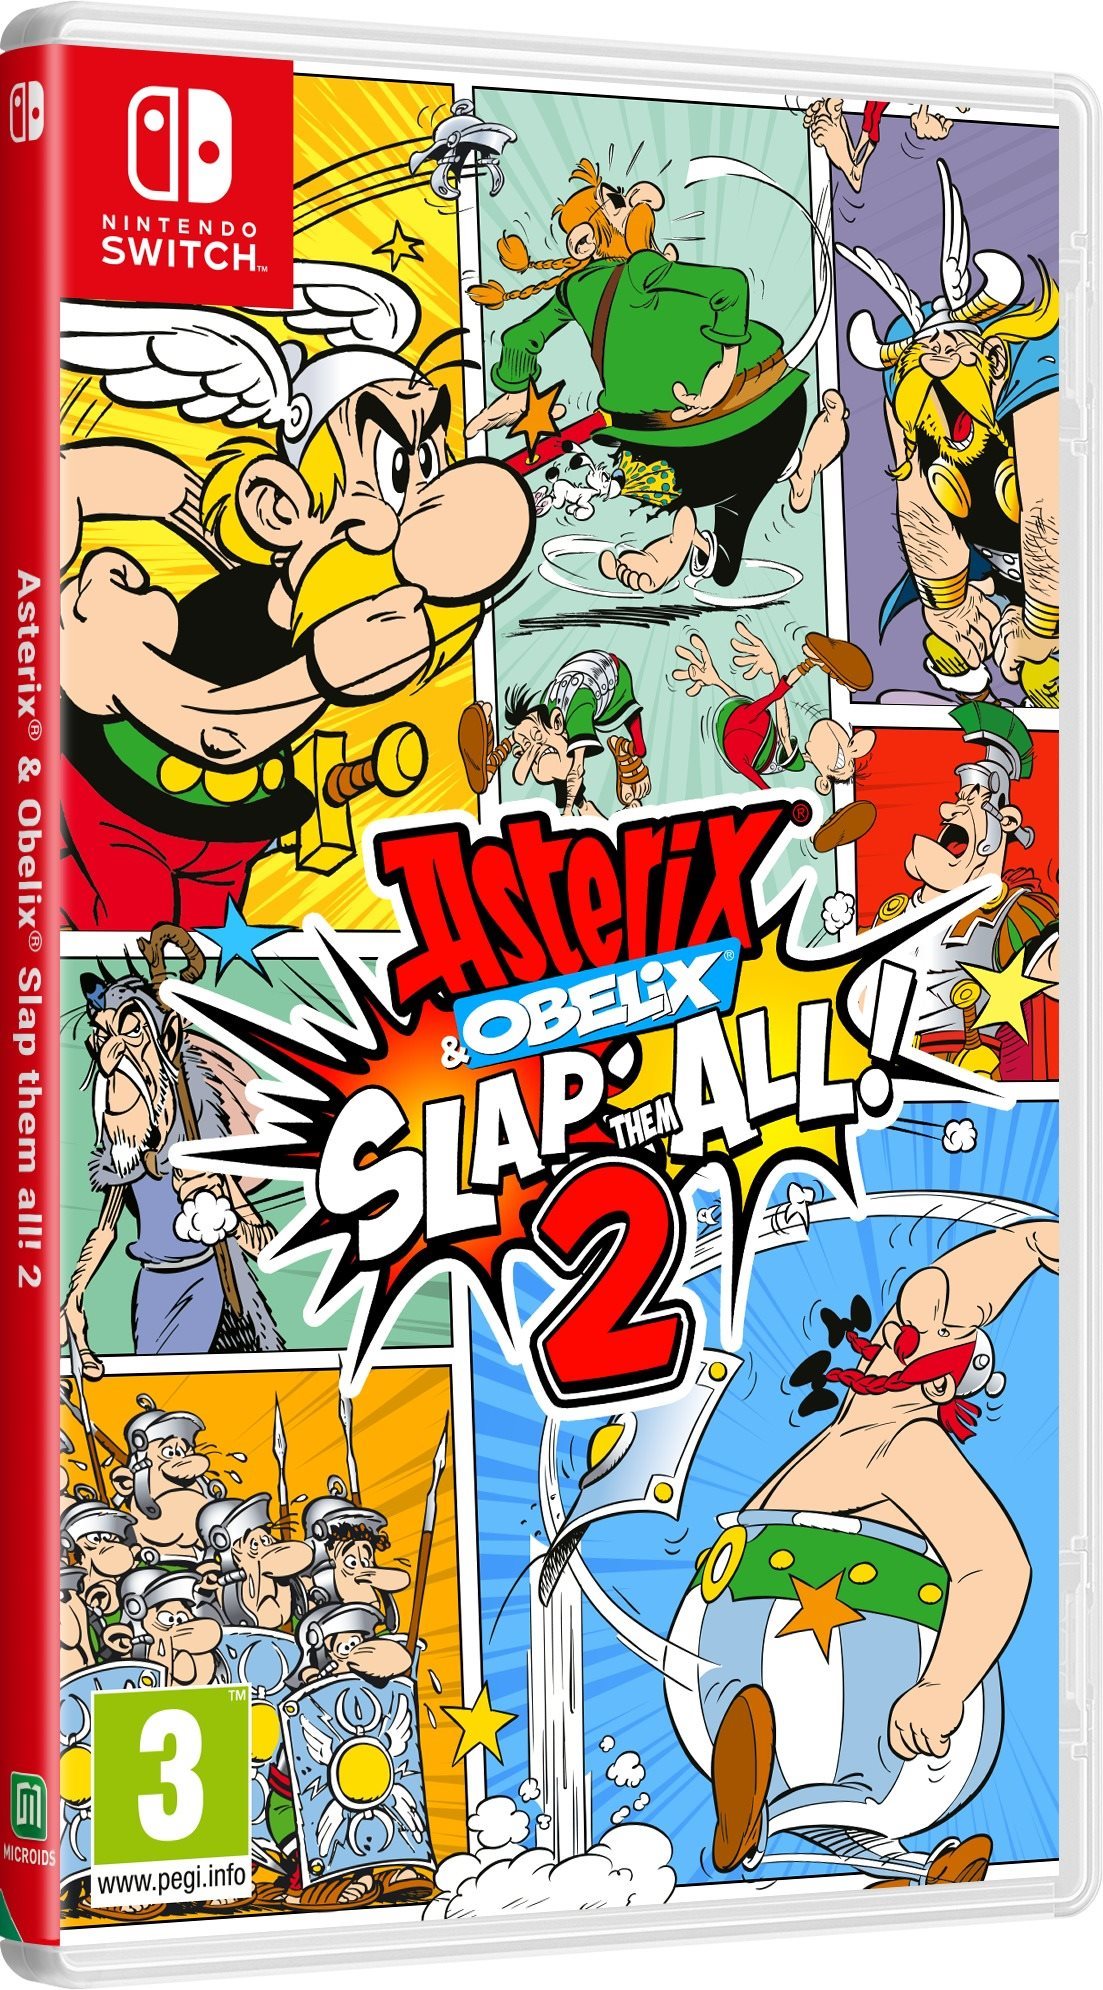 Konzol játék Asterix and Obelix: Slap Them All! 2 - Nintendo Switch